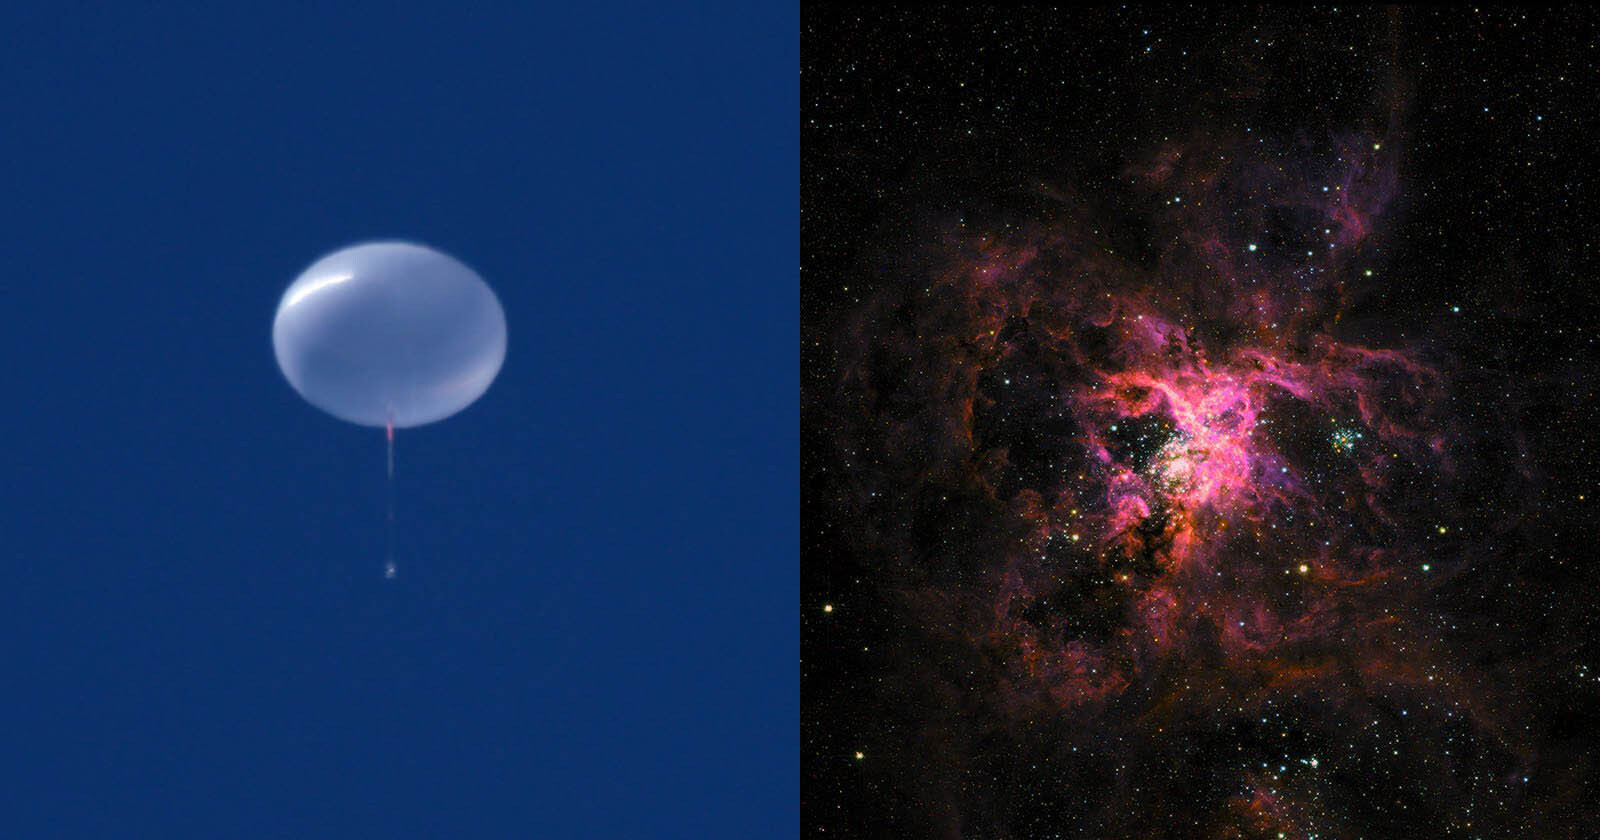  superbit telescope captures space from stadium-sized balloon 